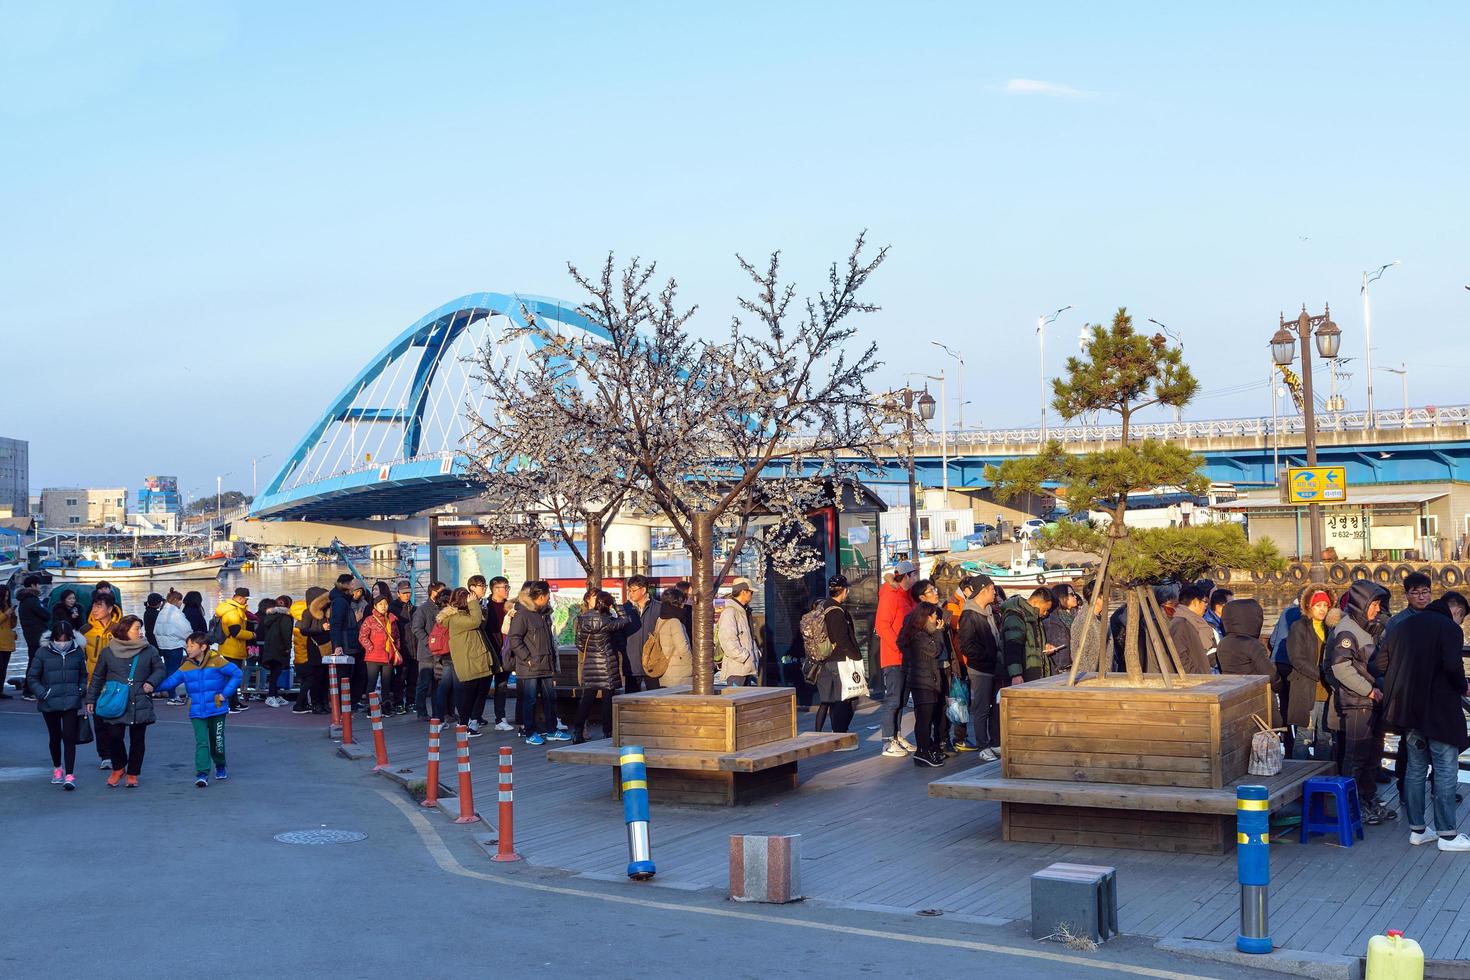 Seoul, Korea, Jan 02, 2016 - Visitors lined up to take a ferry photo